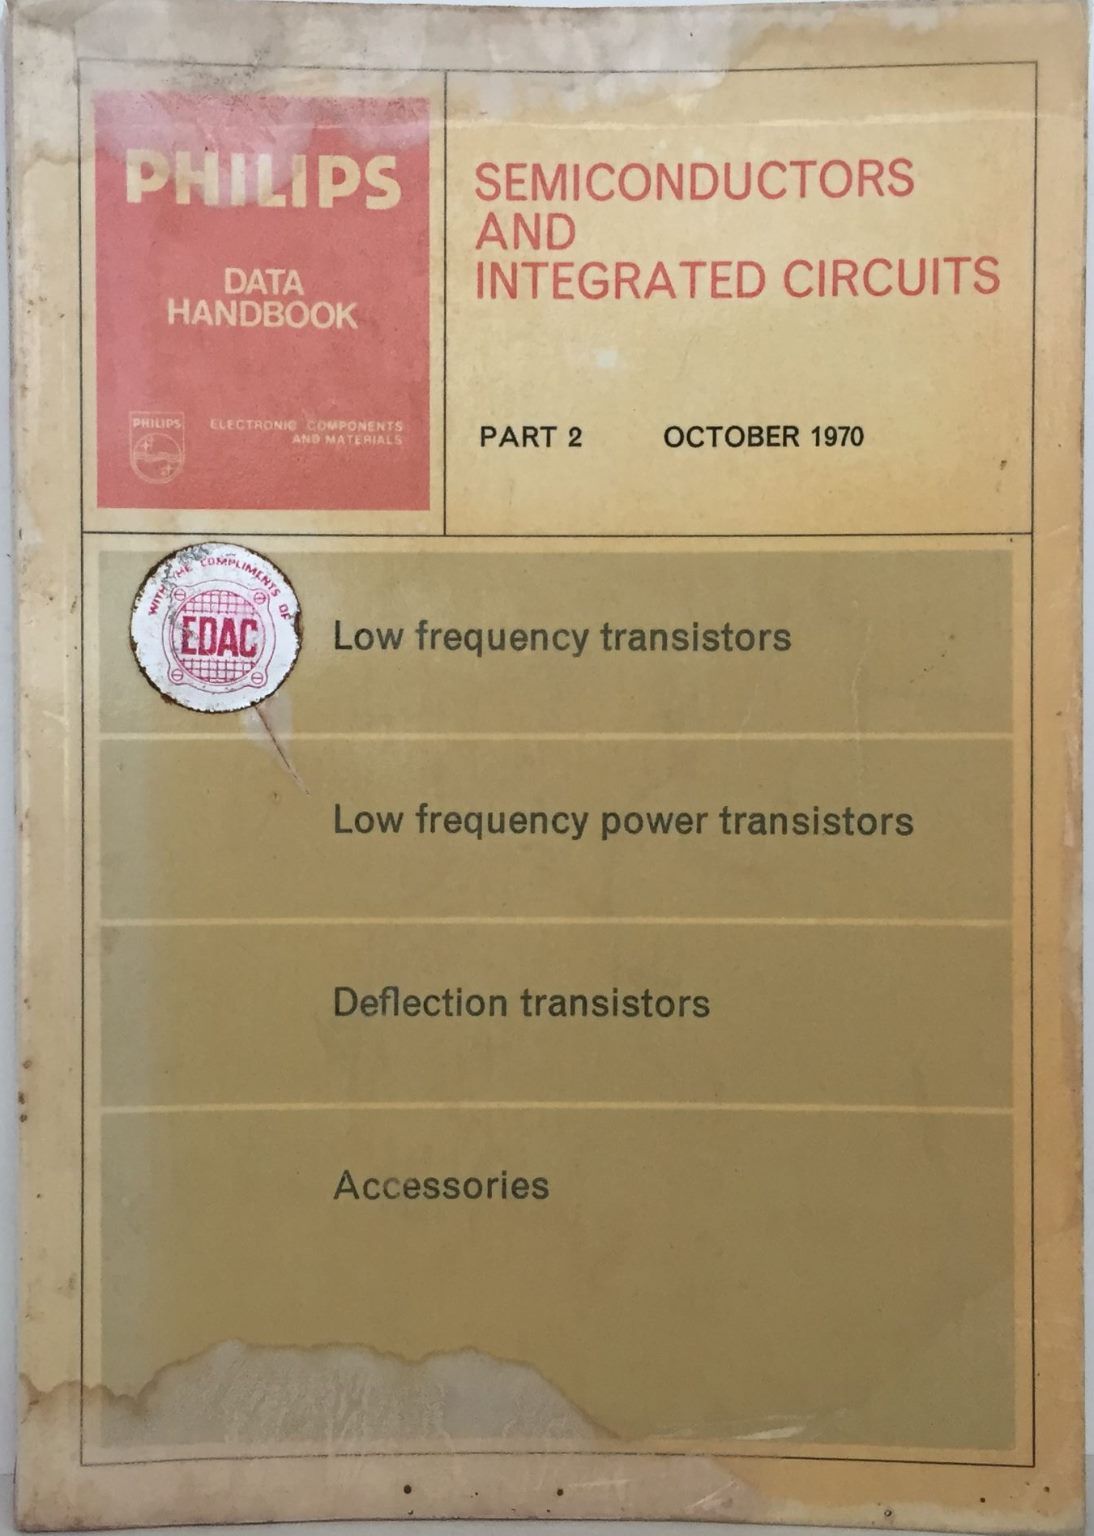 PHILIPS DATA HANDBOOK: Semiconductors and Integrated Circuits Part 2